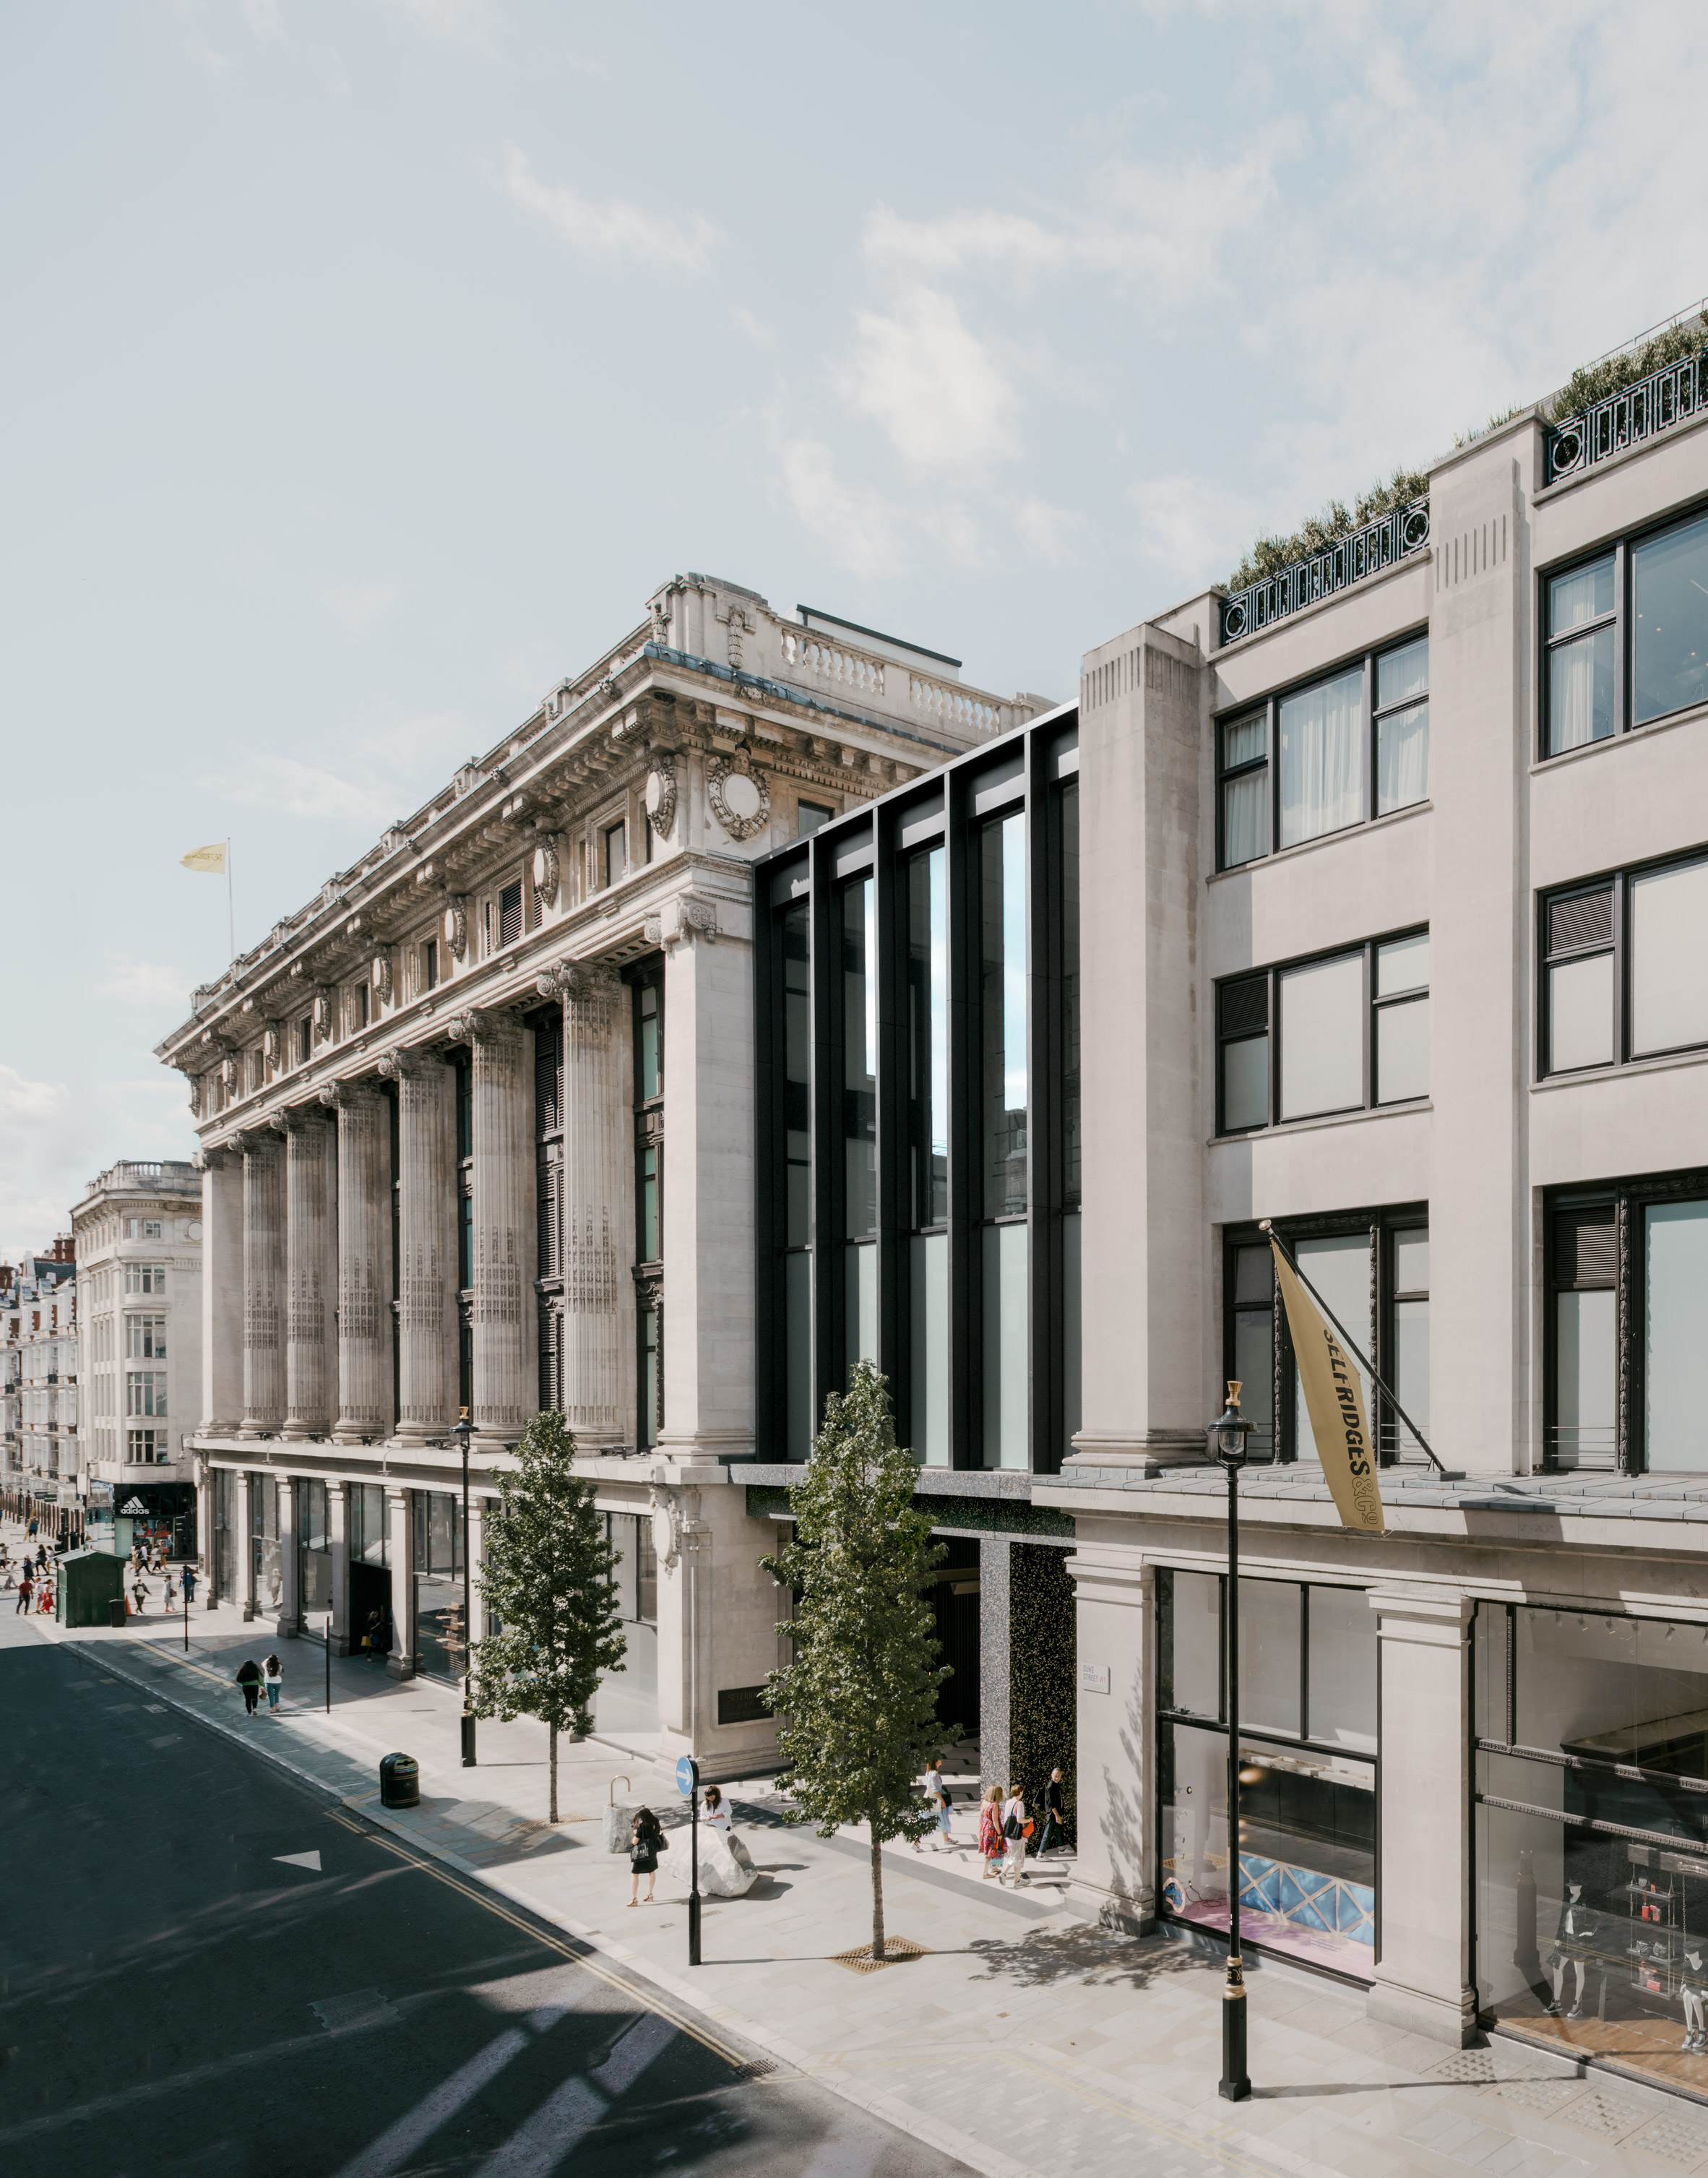 Luis Vuitton Selfridges - Architects Brighton - London - Europe